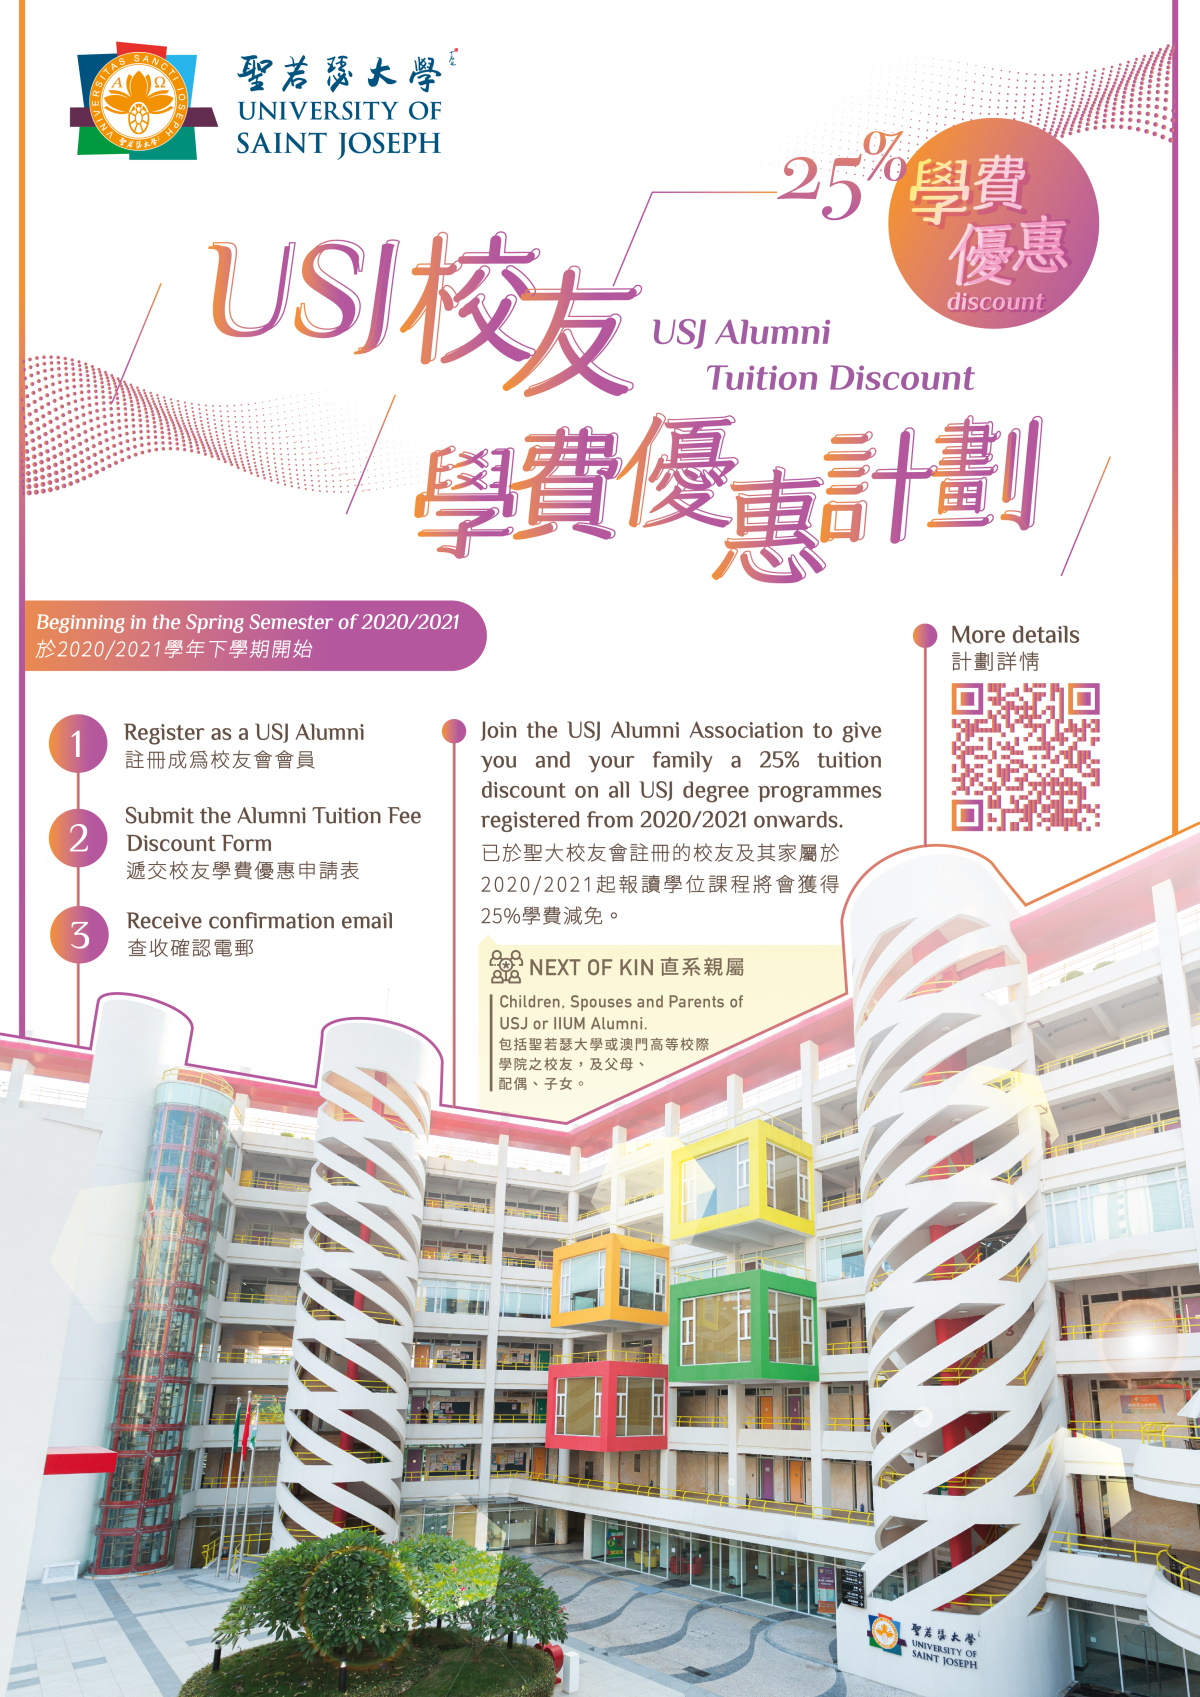 SRO_USJ Alumni Tuition Discount_poster_V3_s